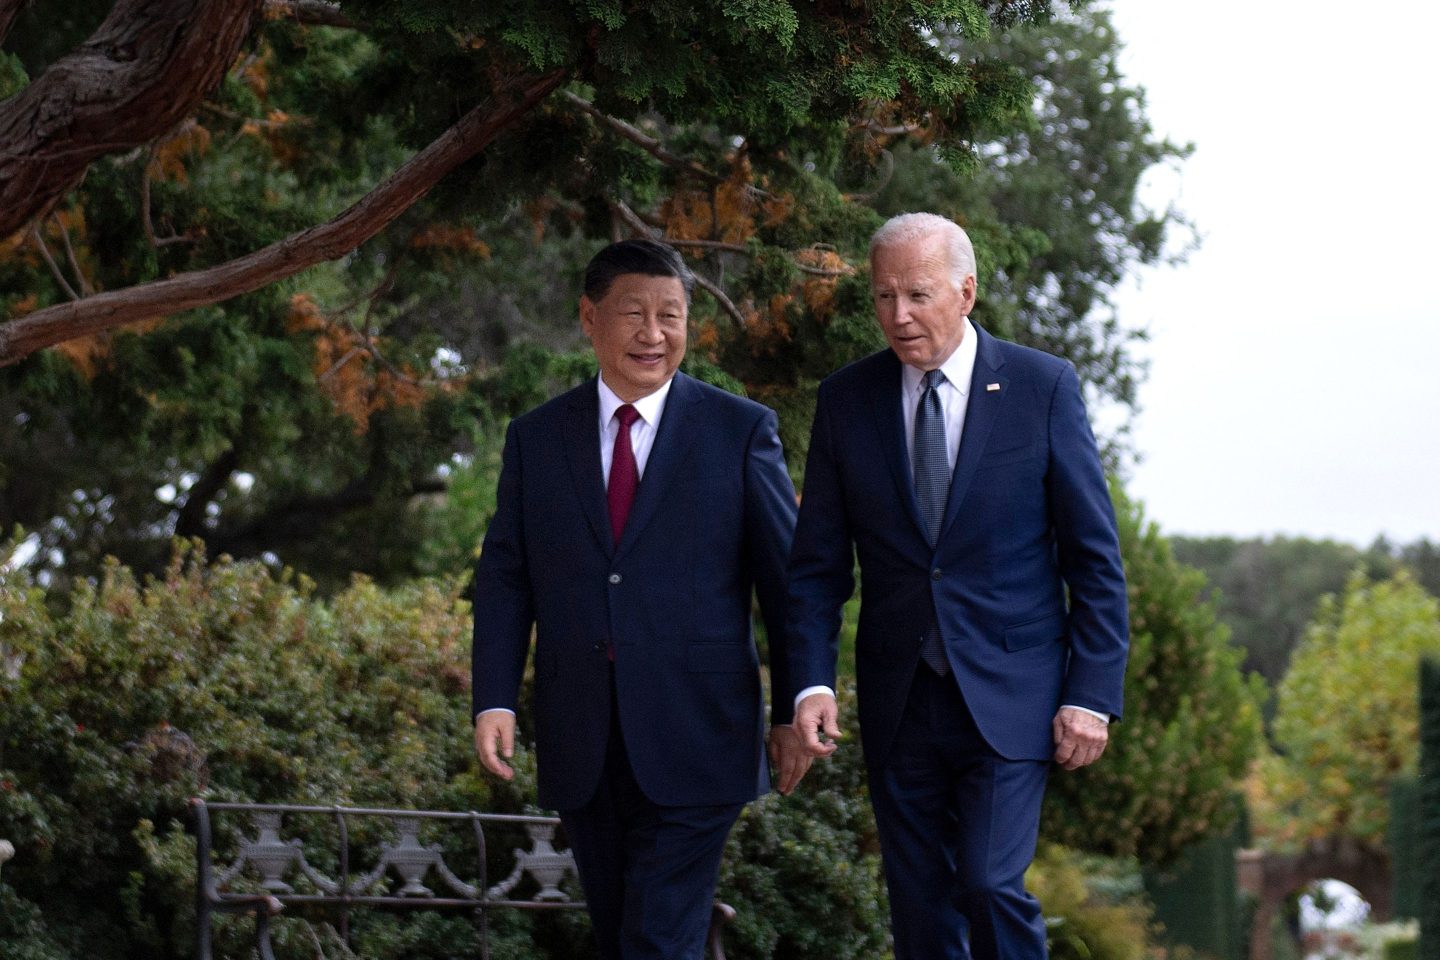 President Joe Biden walking alongside President Xi Jinping of China.